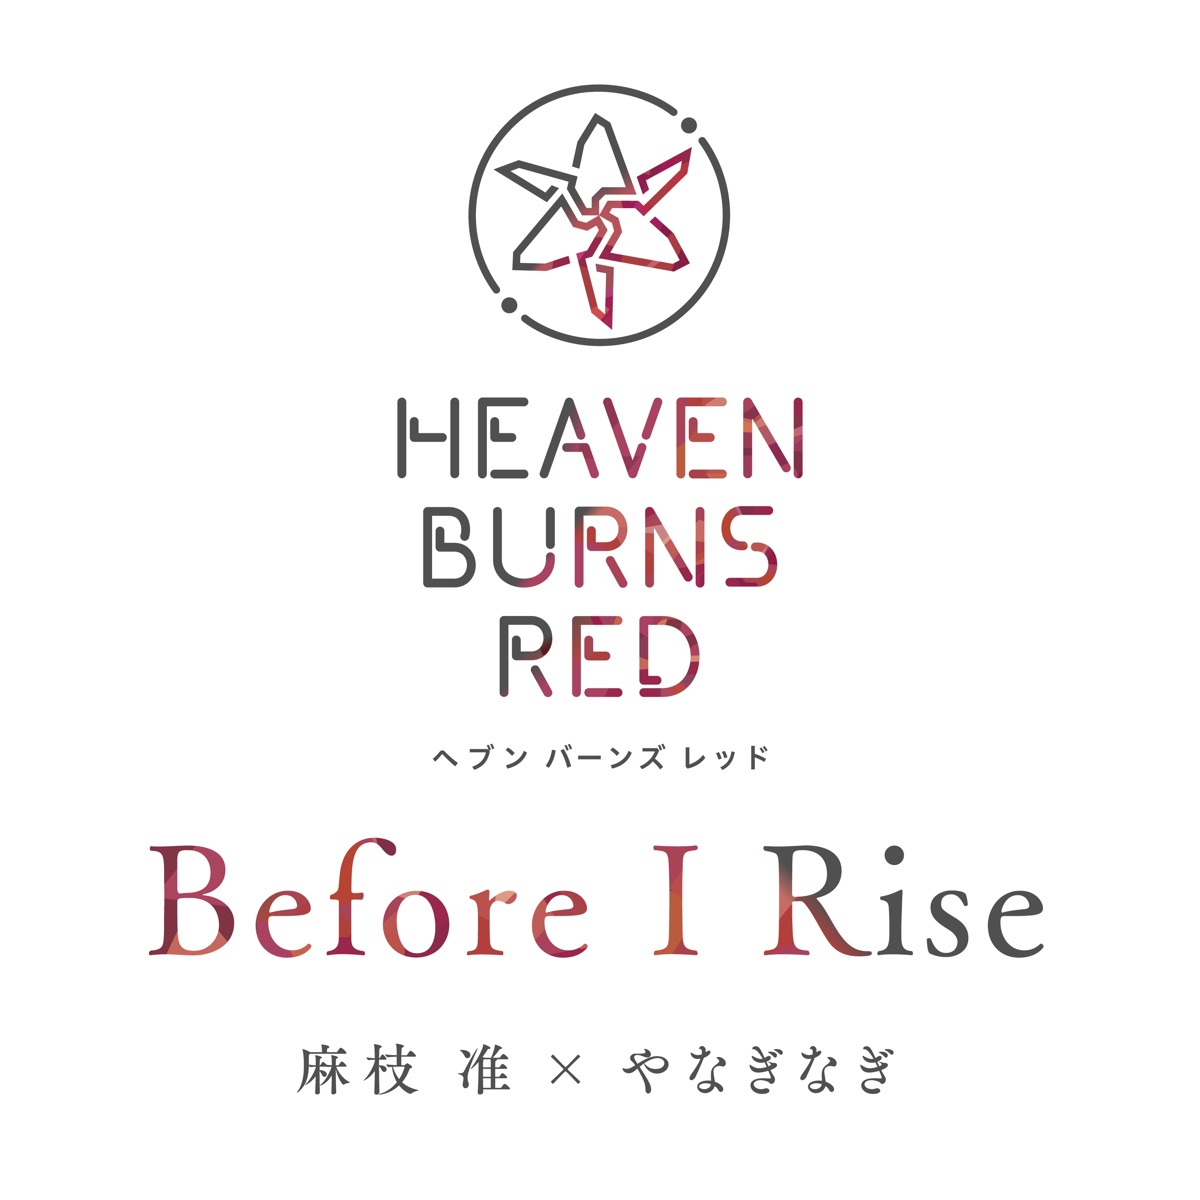 Cover art for『Jun Maeda x yanaginagi - Before I Rise』from the release『Before I Rise